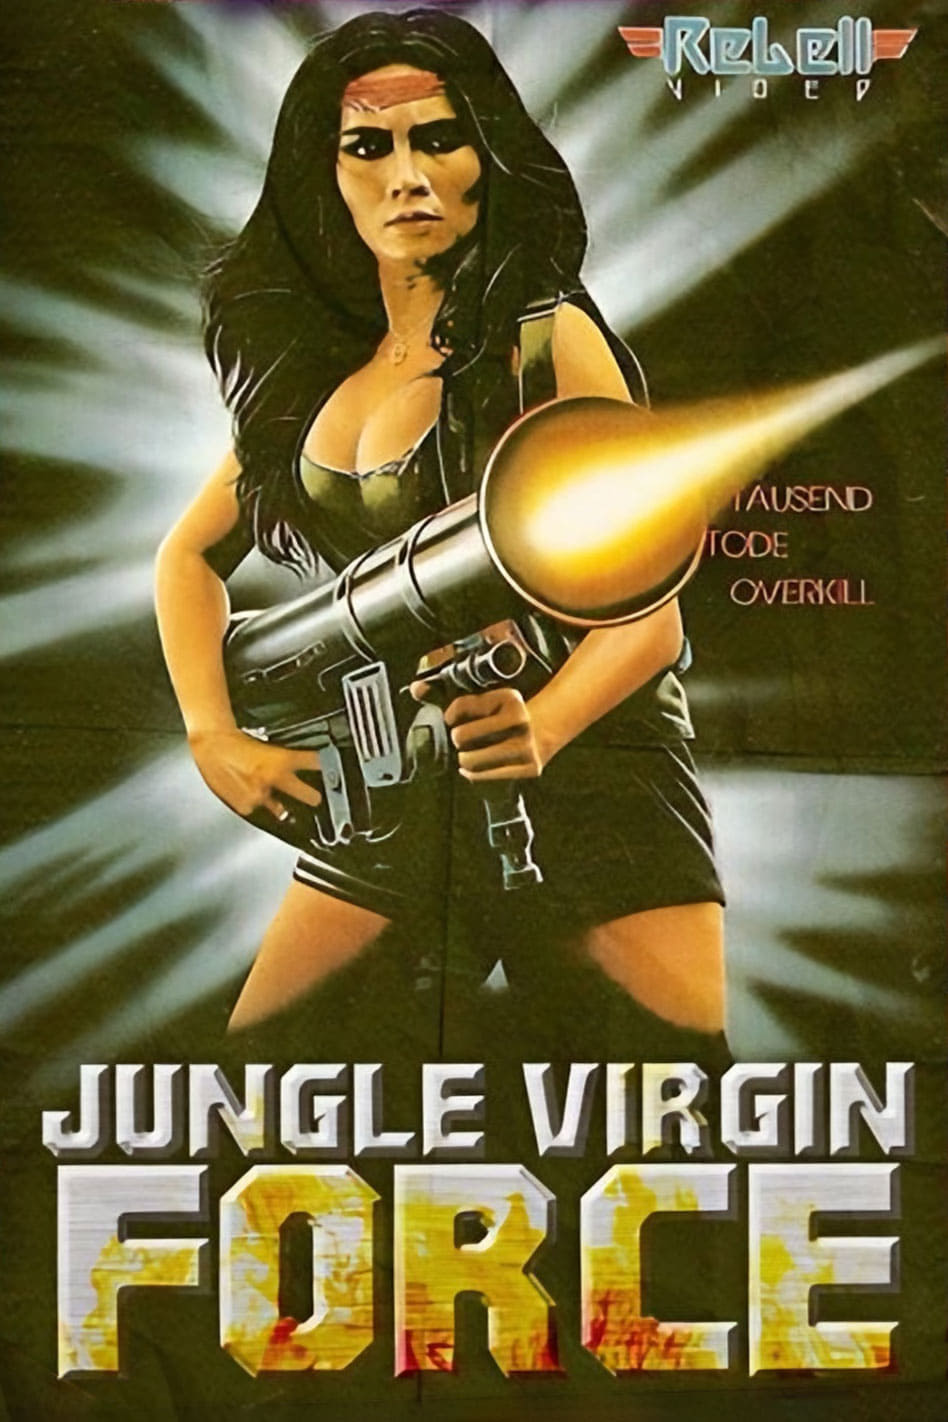 Jungle Virgin Force (1982)